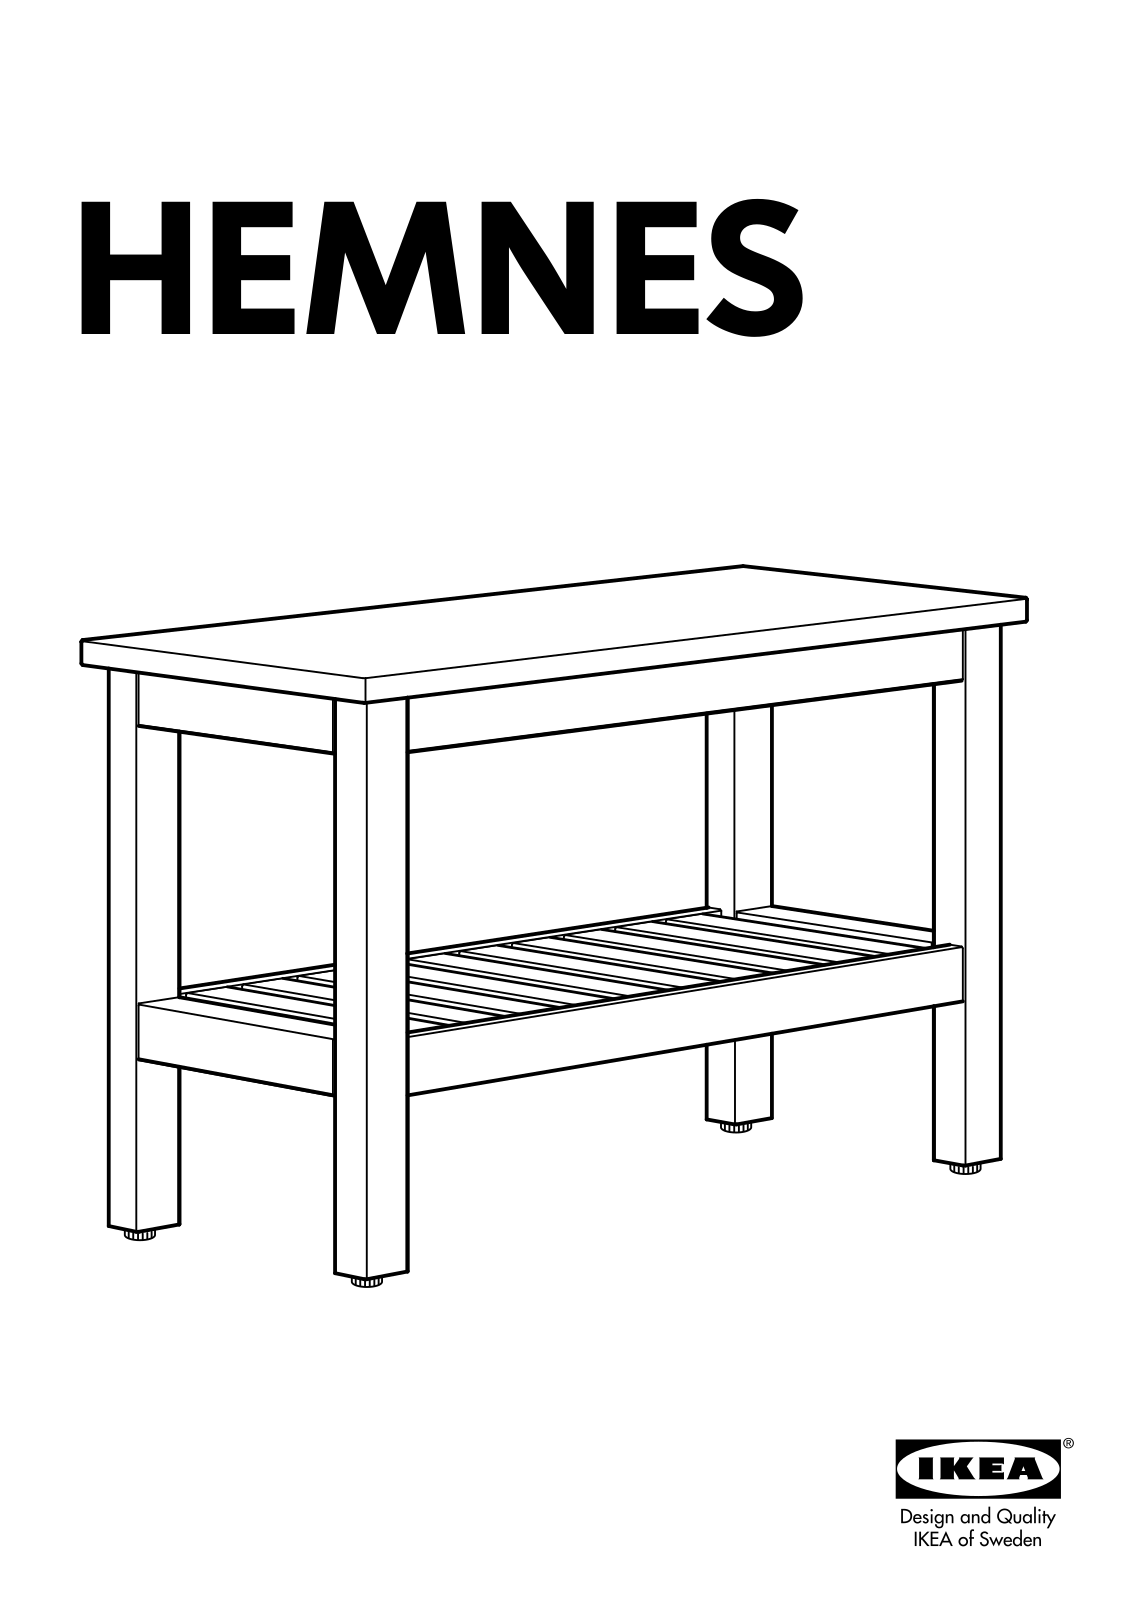 IKEA HEMNES Bench User Manual